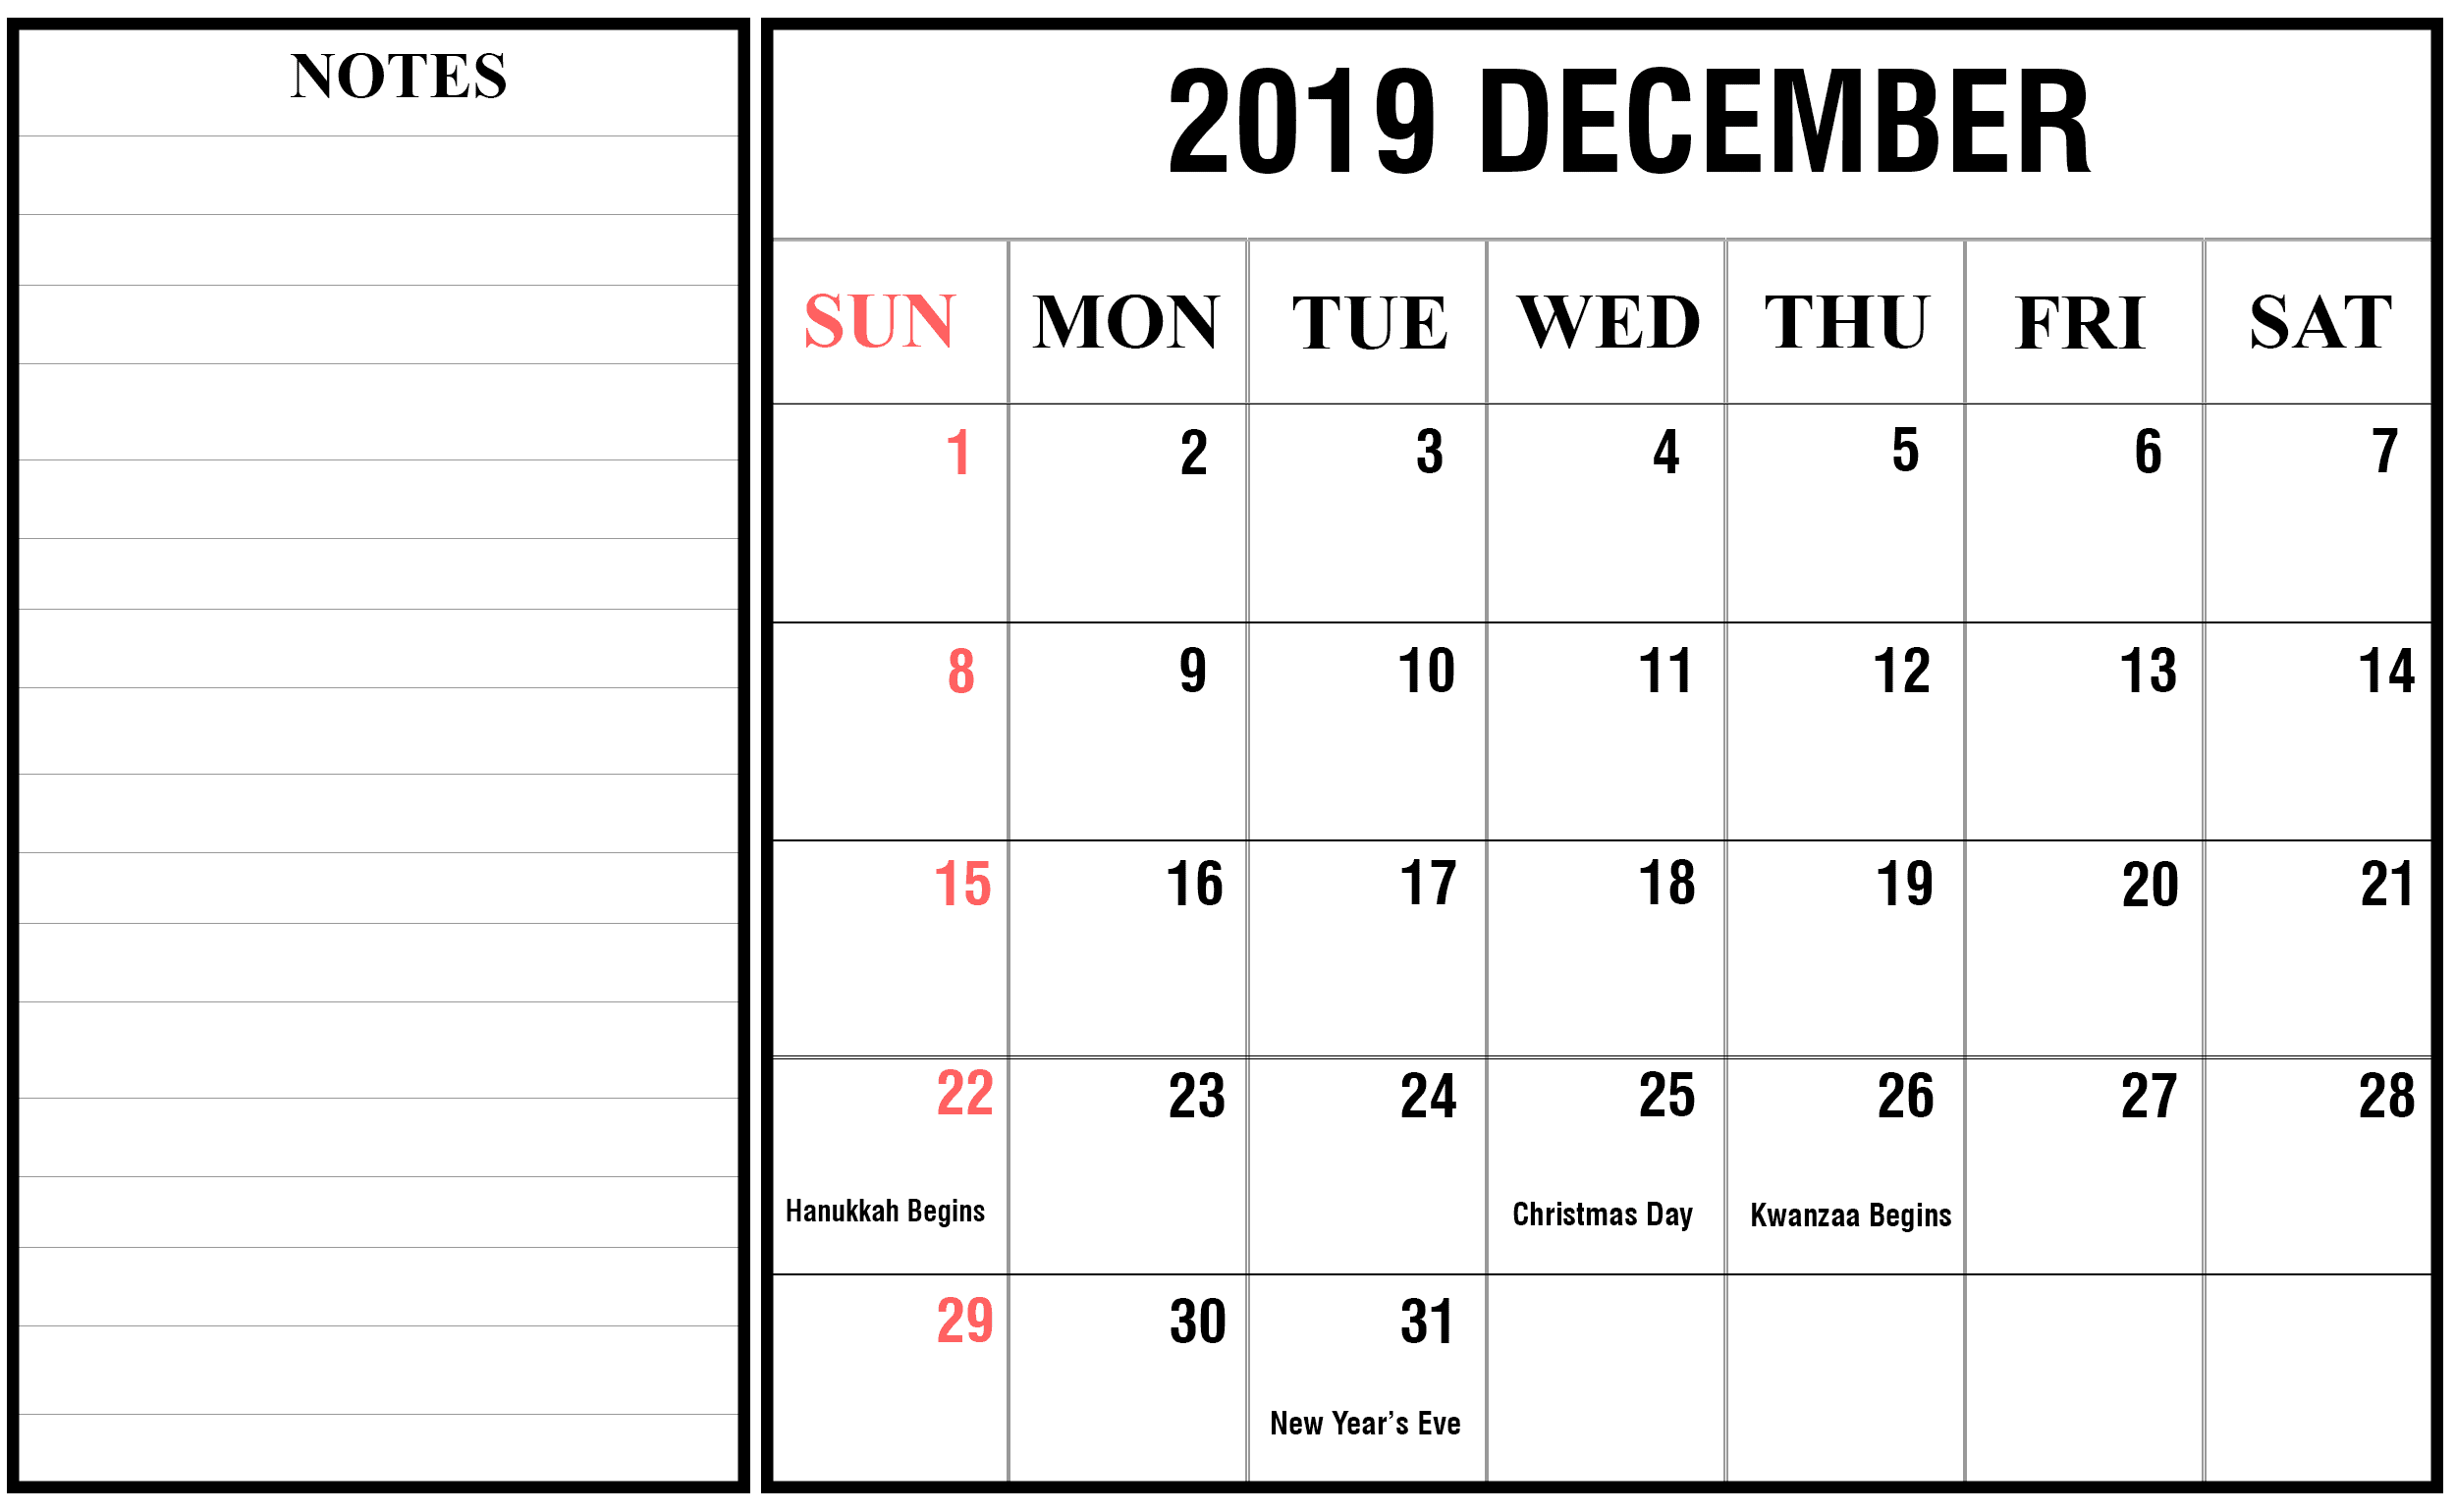 2019 December Holidays Calendar 